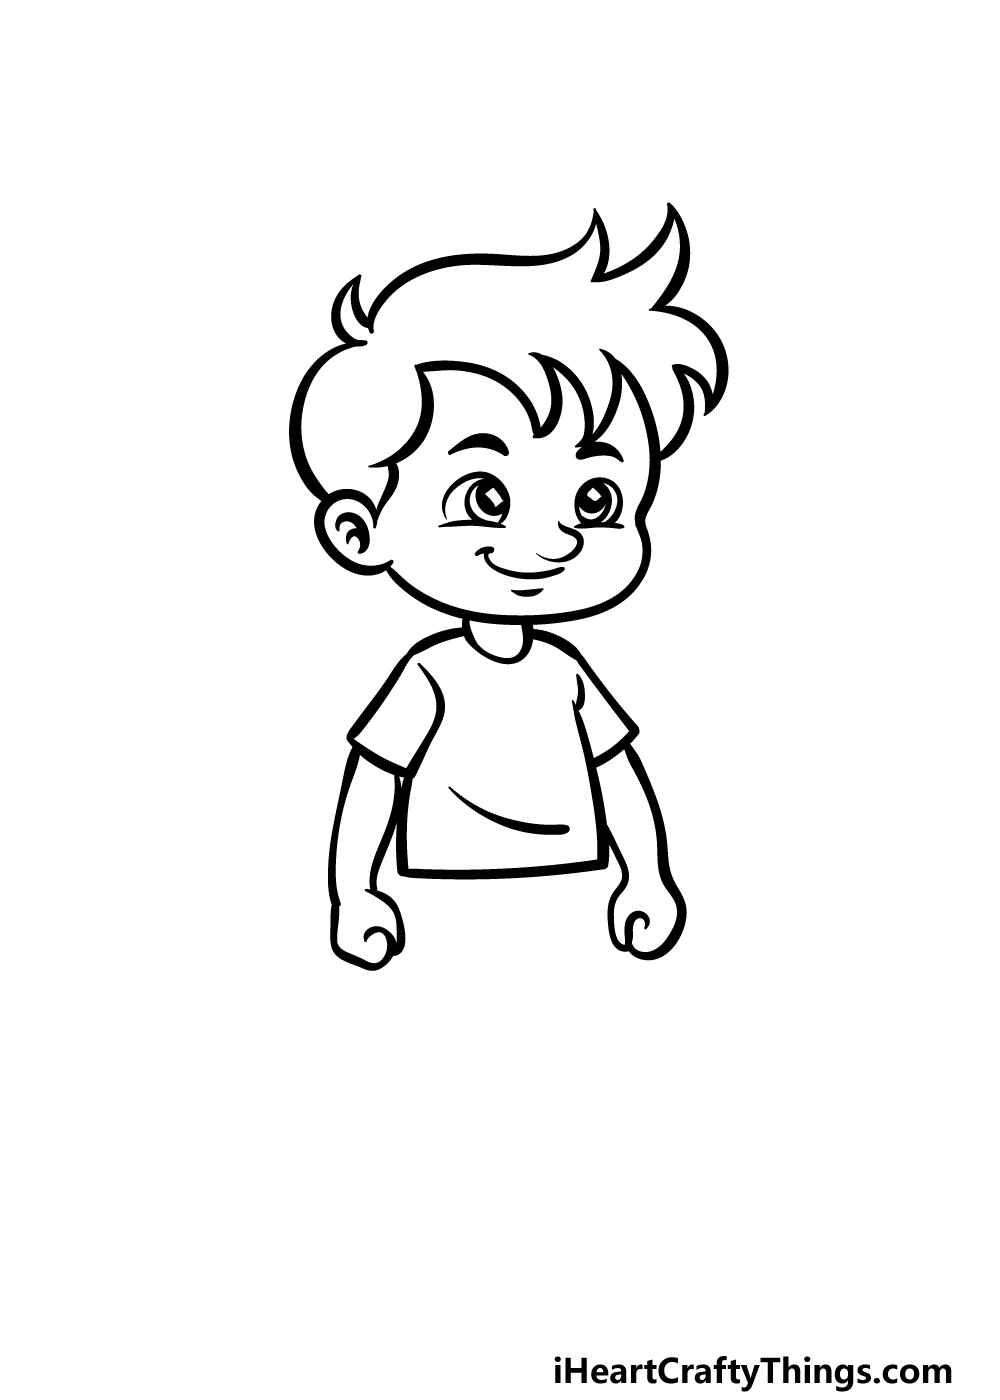 How to Draw a Boy: Easy Drawing Tutorial For Kids-saigonsouth.com.vn